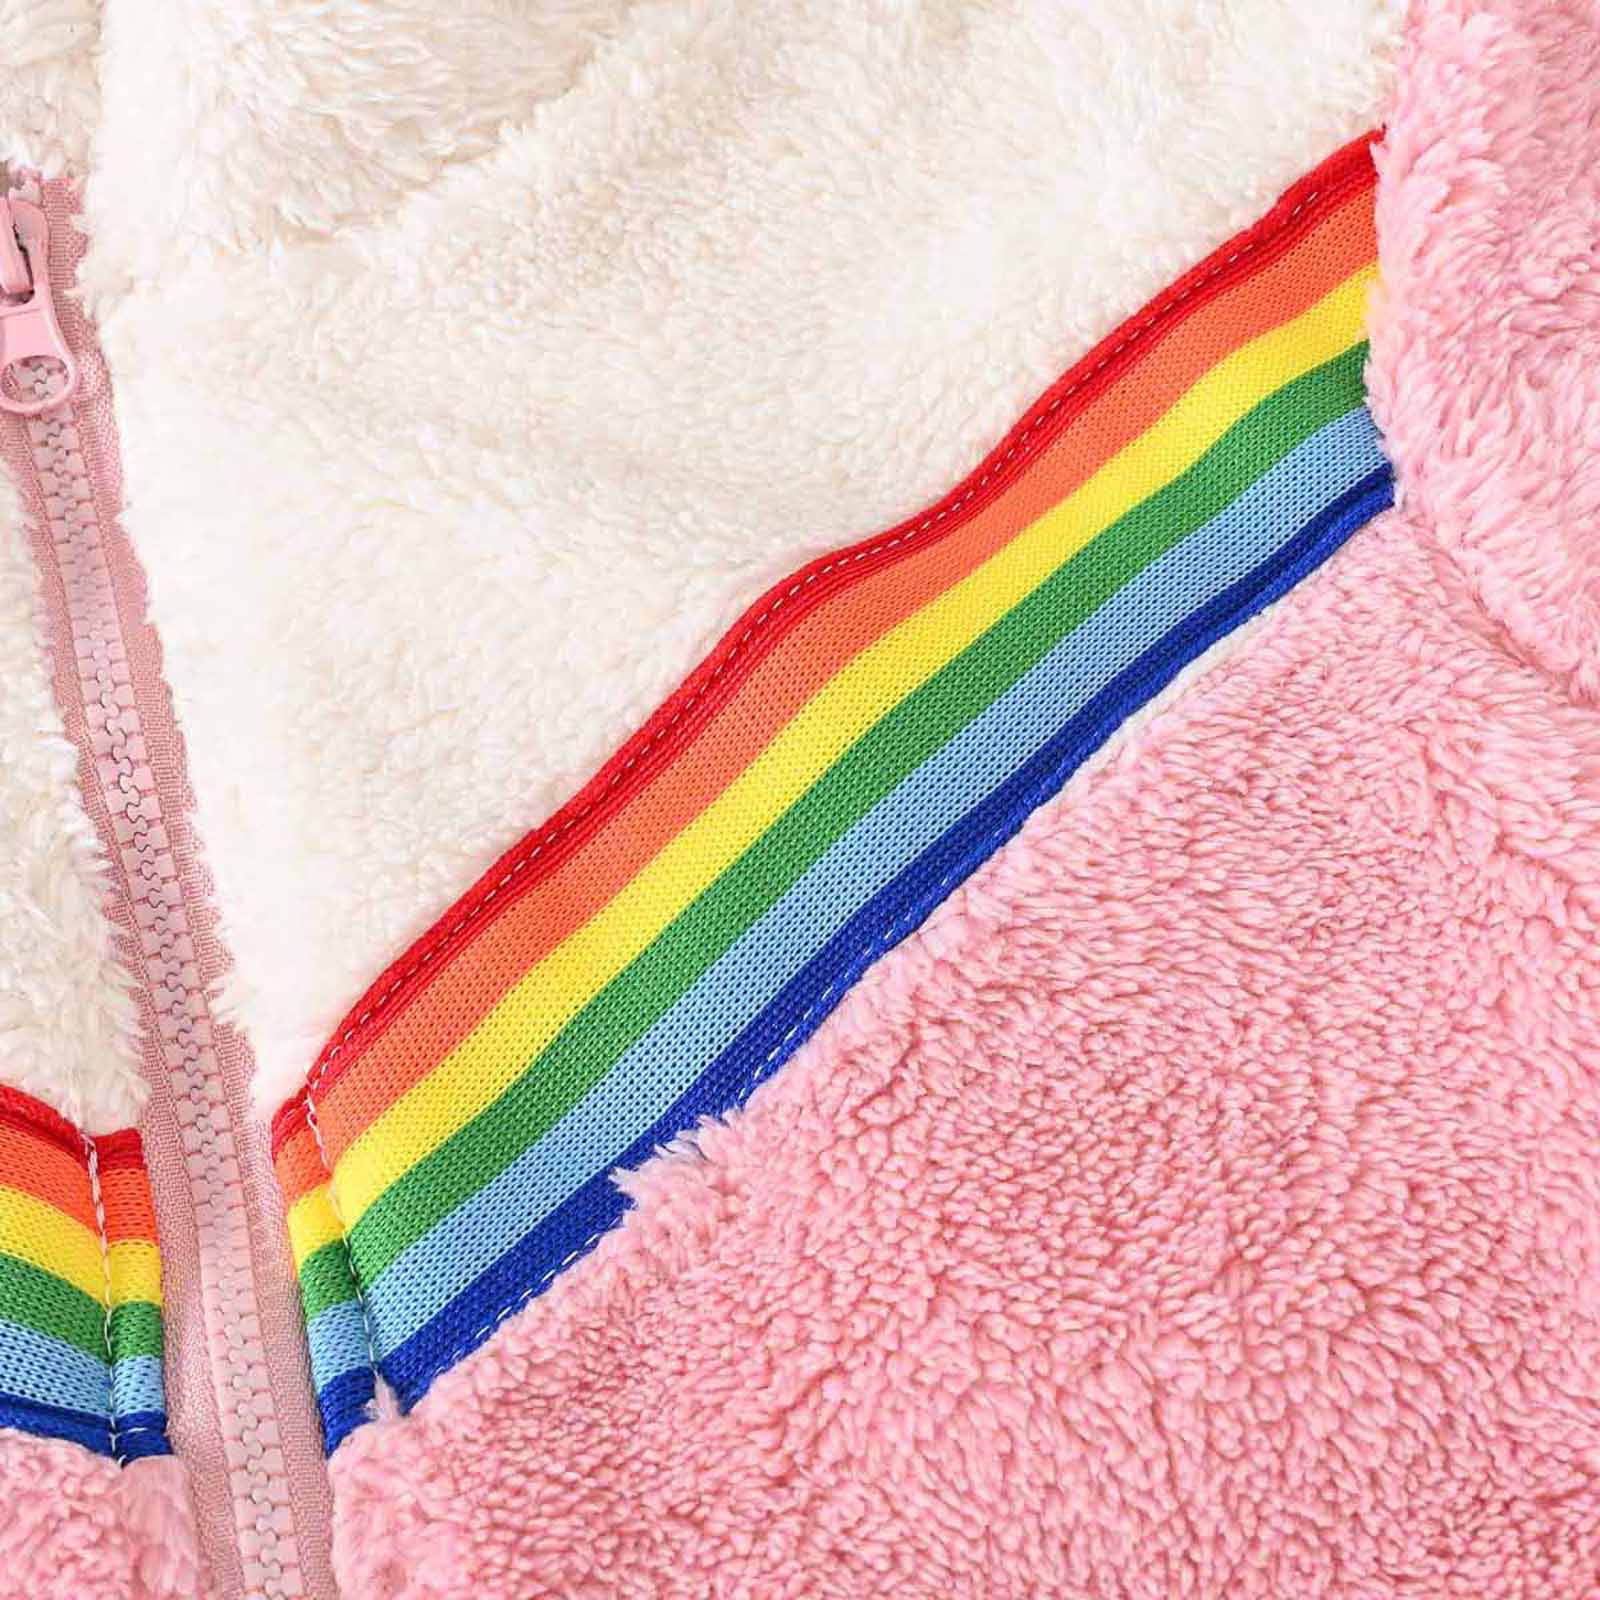 YYDGH Girls Zipper Jacket Fuzzy Sweatshirt Long Sleeve Casual Cozy Fleece Sherpa Outwear Coat Full-Zip Rainbow Jackets(Pink,5-6 Years) - image 3 of 8